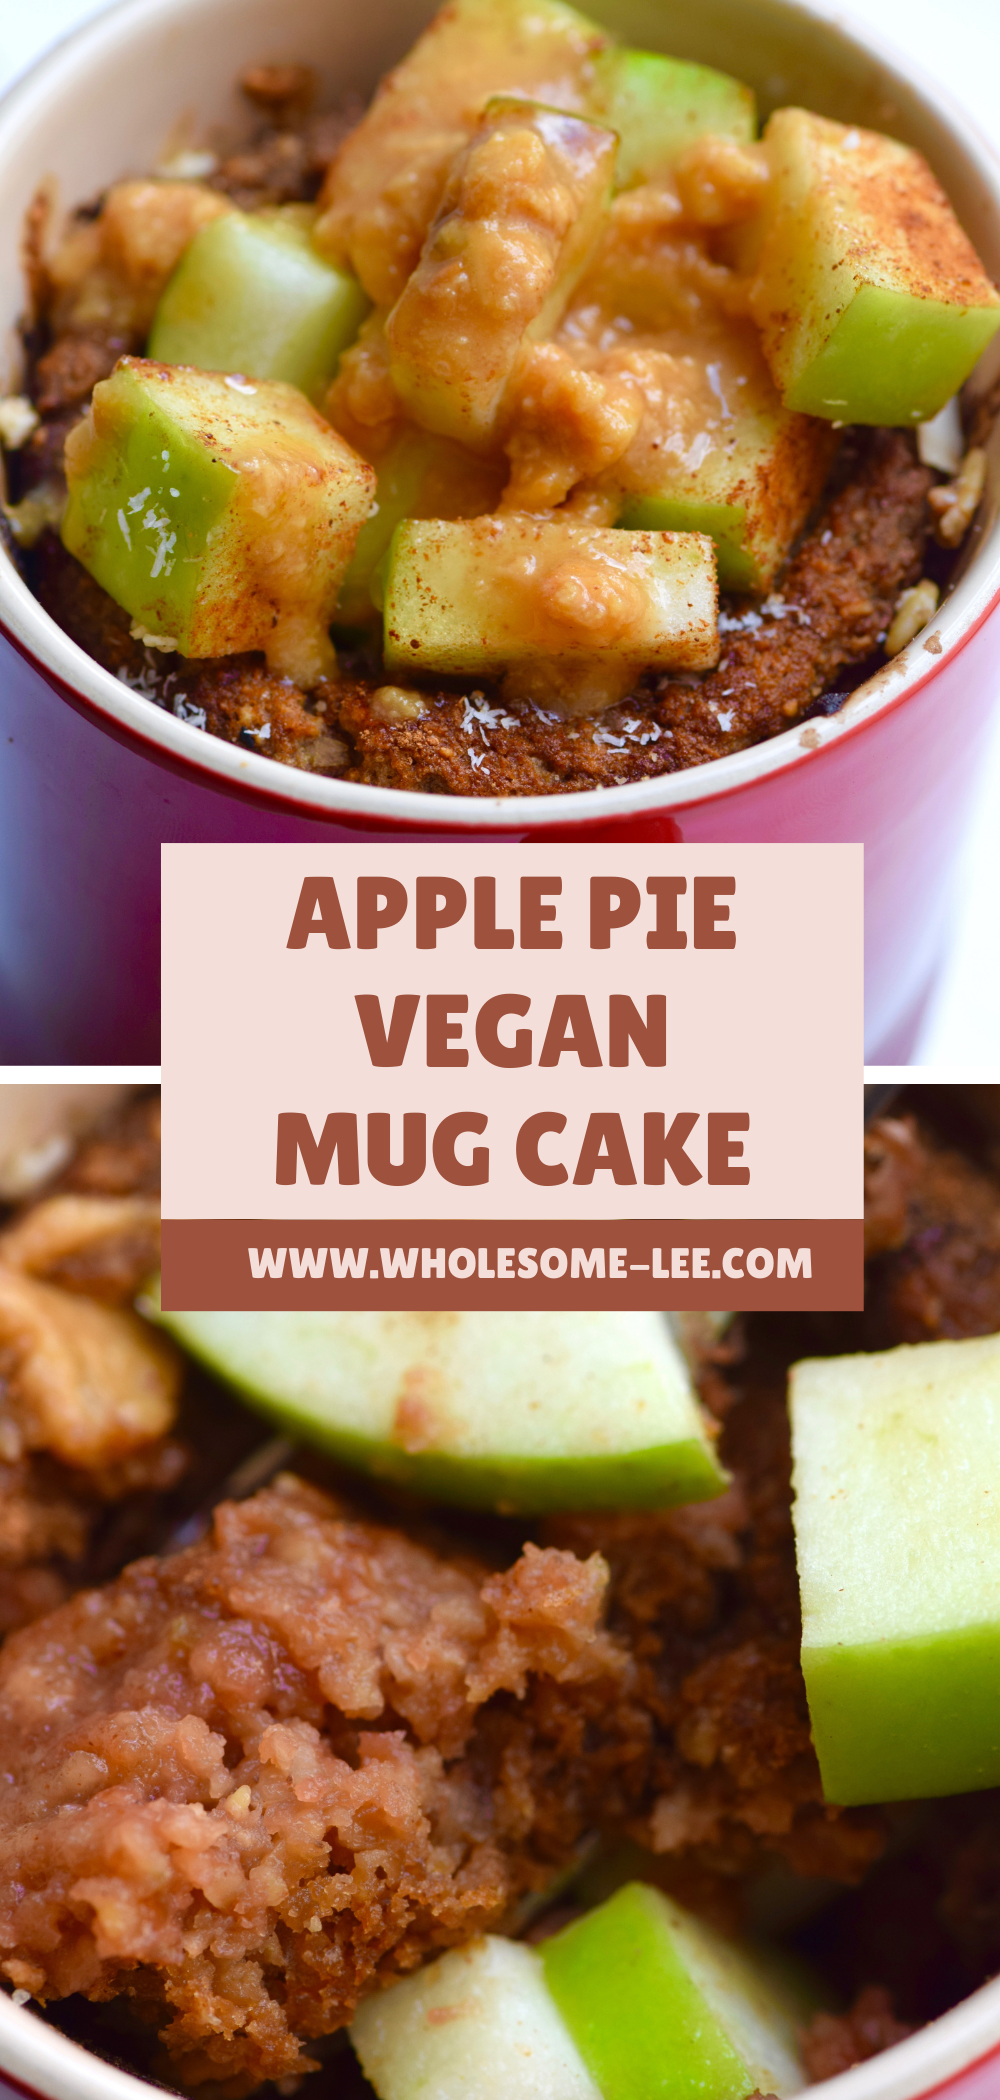 Apple pie vegan mug cake topped with apples and caramel sauce